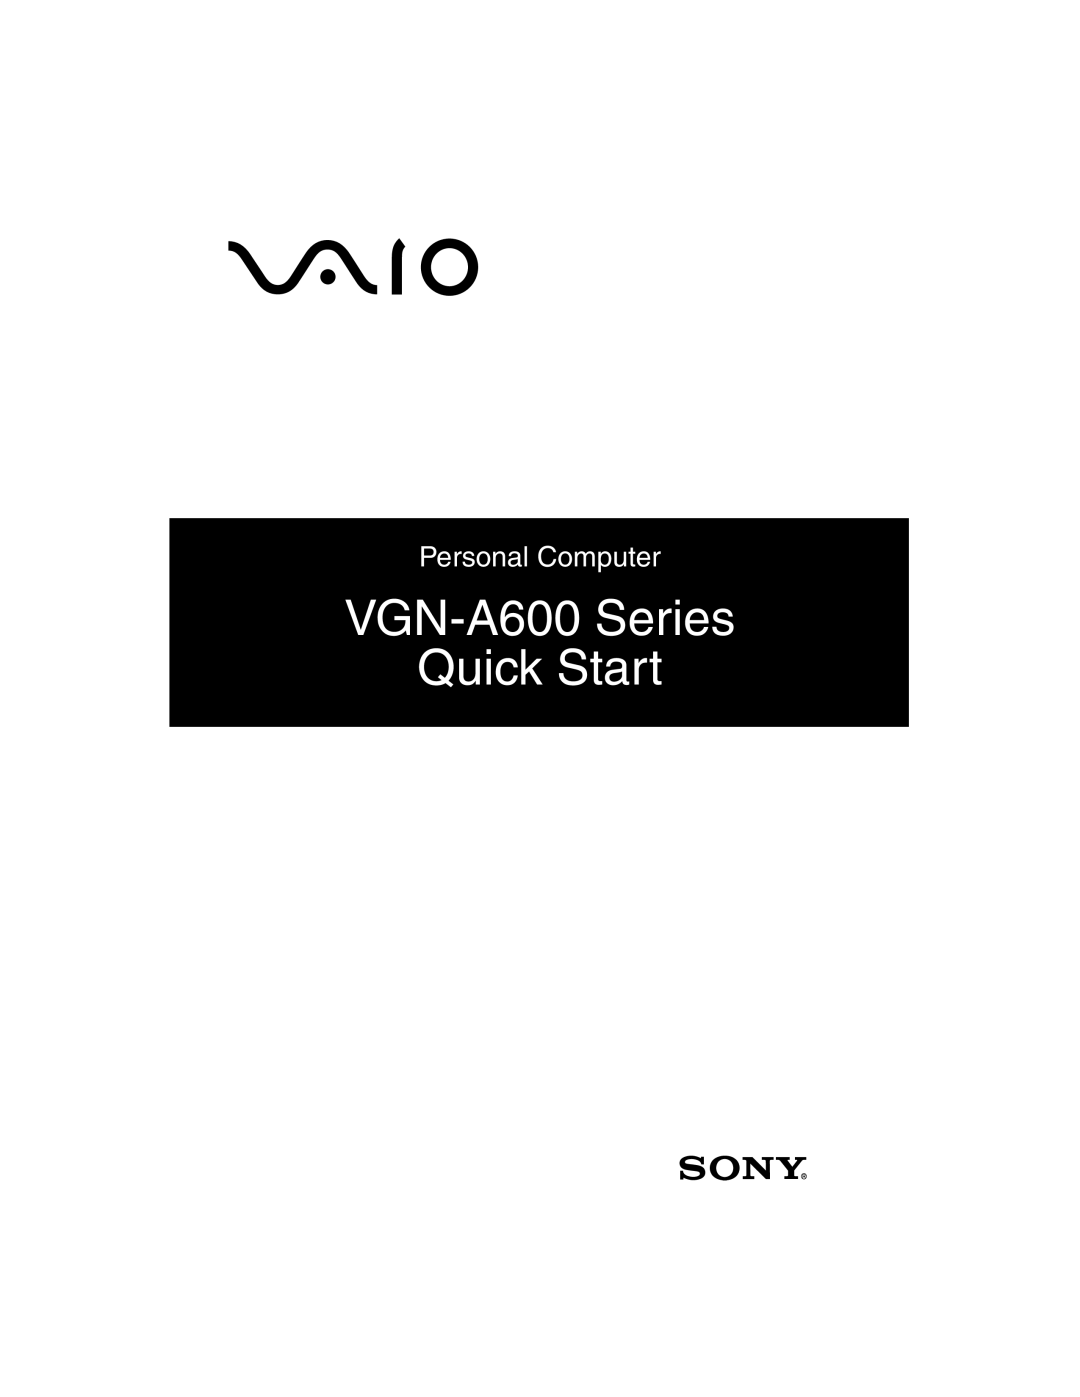 Sony quick start VGN-A600 Series Quick Start, Personal Computer 